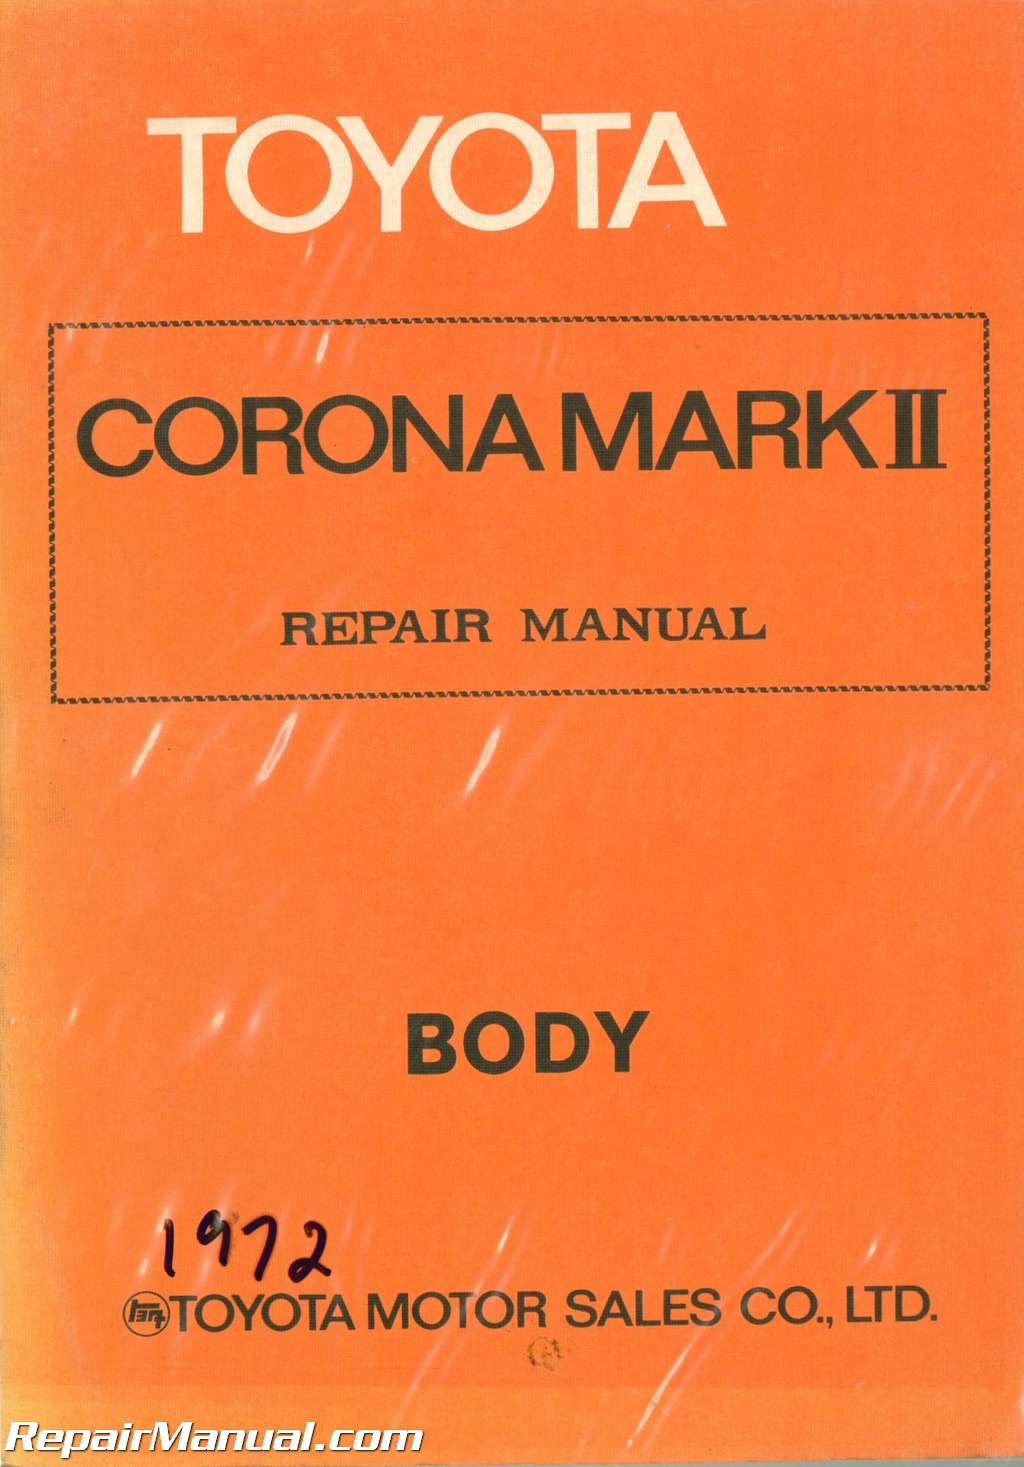 Used 1972 Toyota Corona Mark Ii Body Group Repair Manual